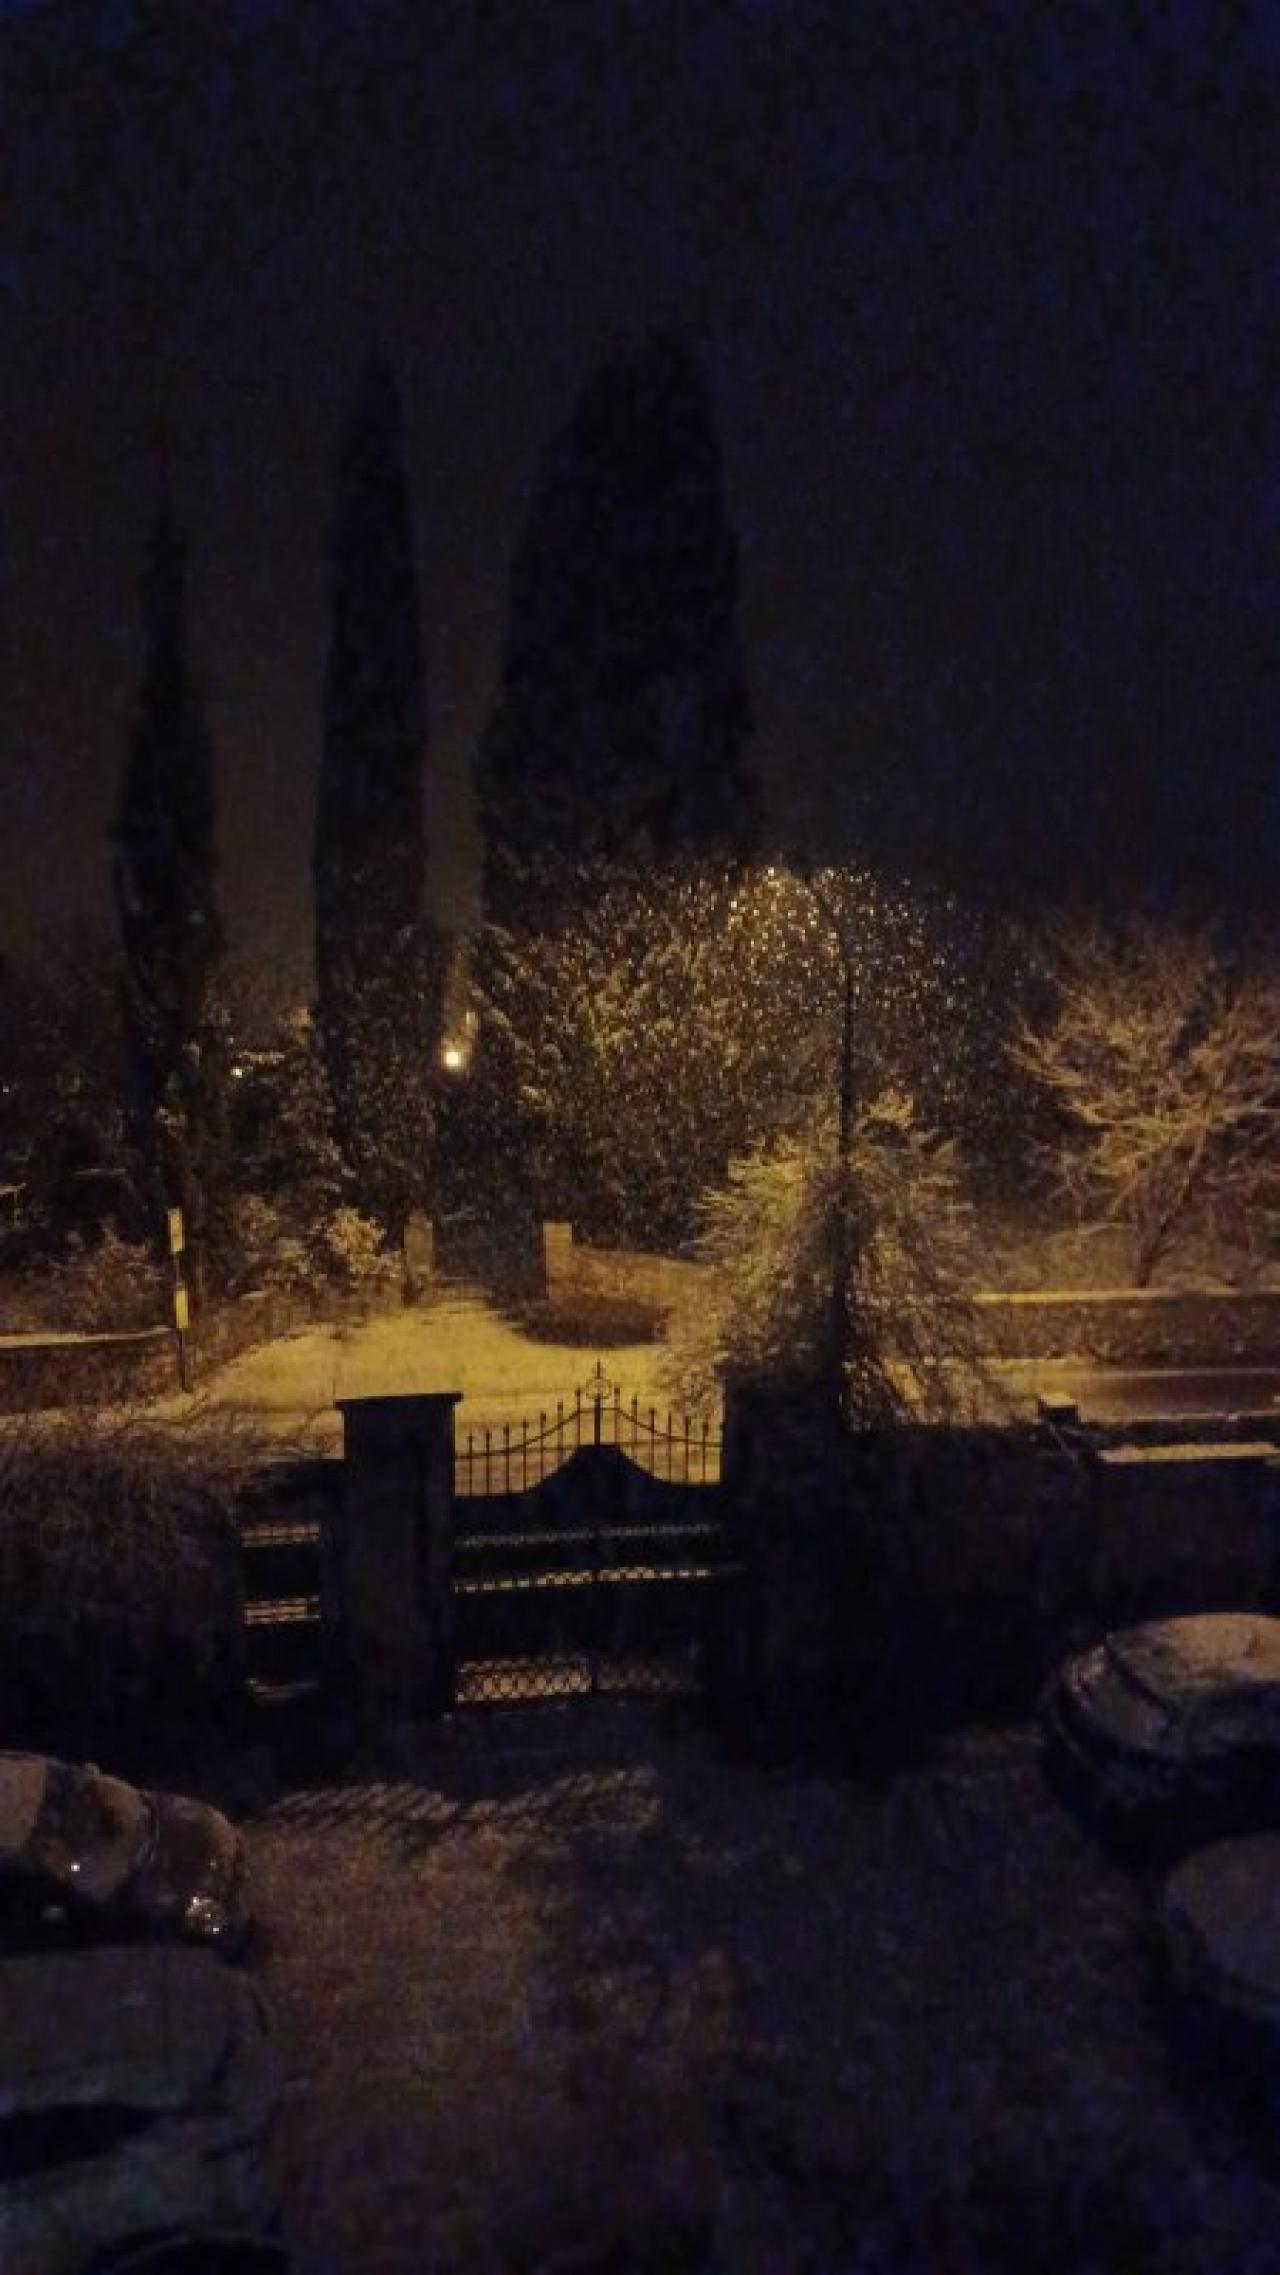 Neve a Siena